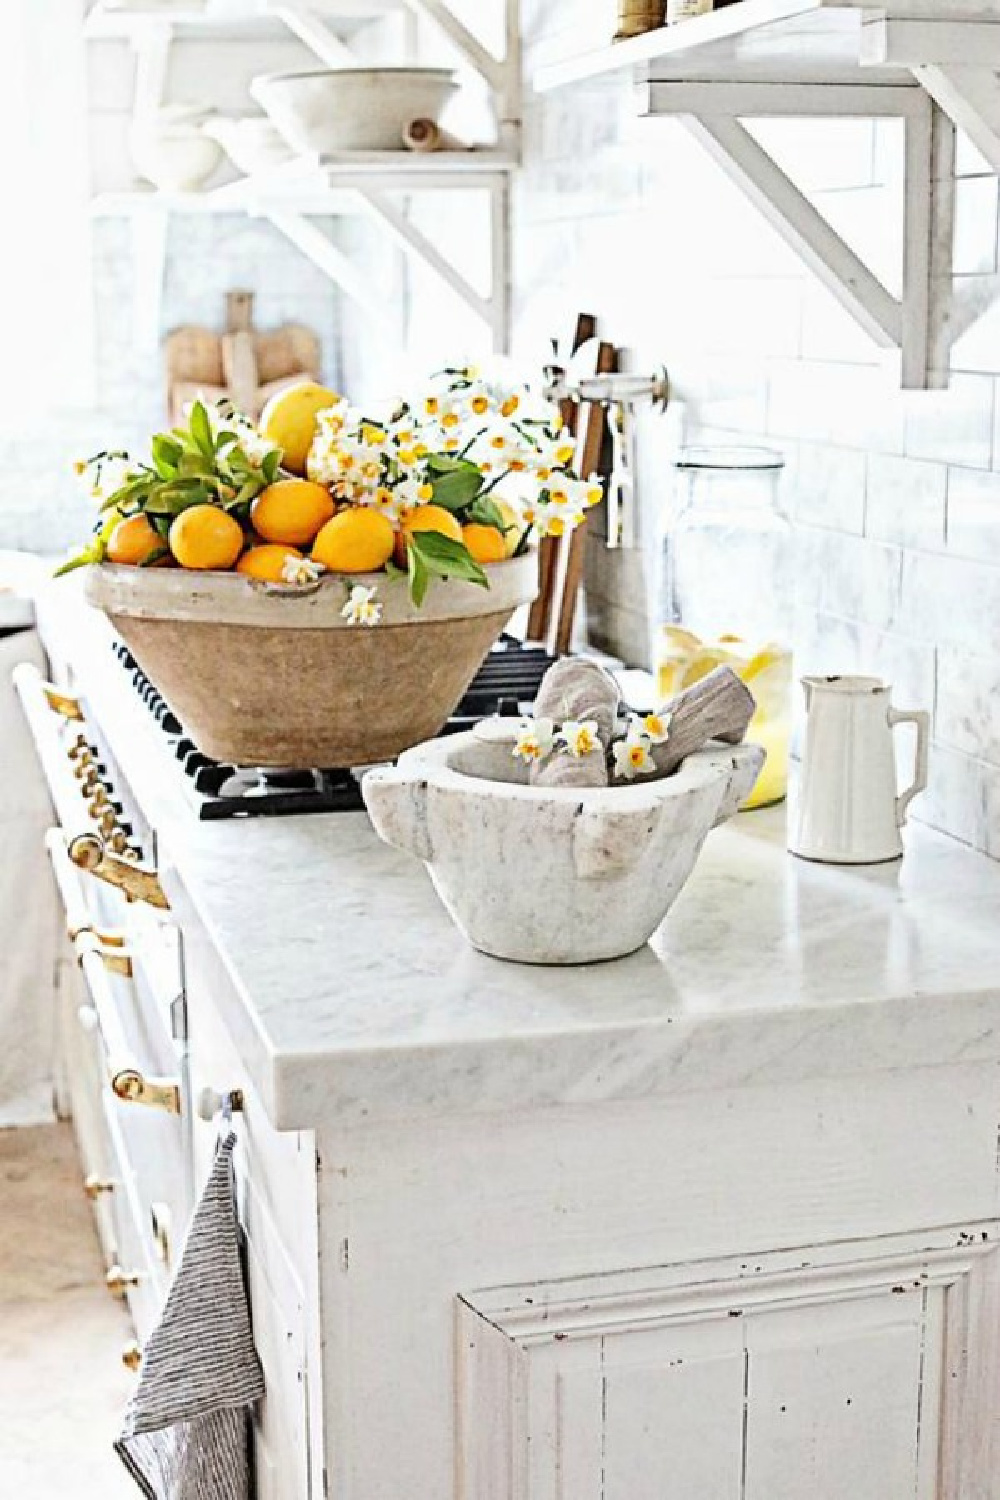 White French farmhouse kitchen with marble countertops and French range - Dreamy Whites Atelier. #whiteFrenchfarmhouse #frenchkitchens #rusticelegance